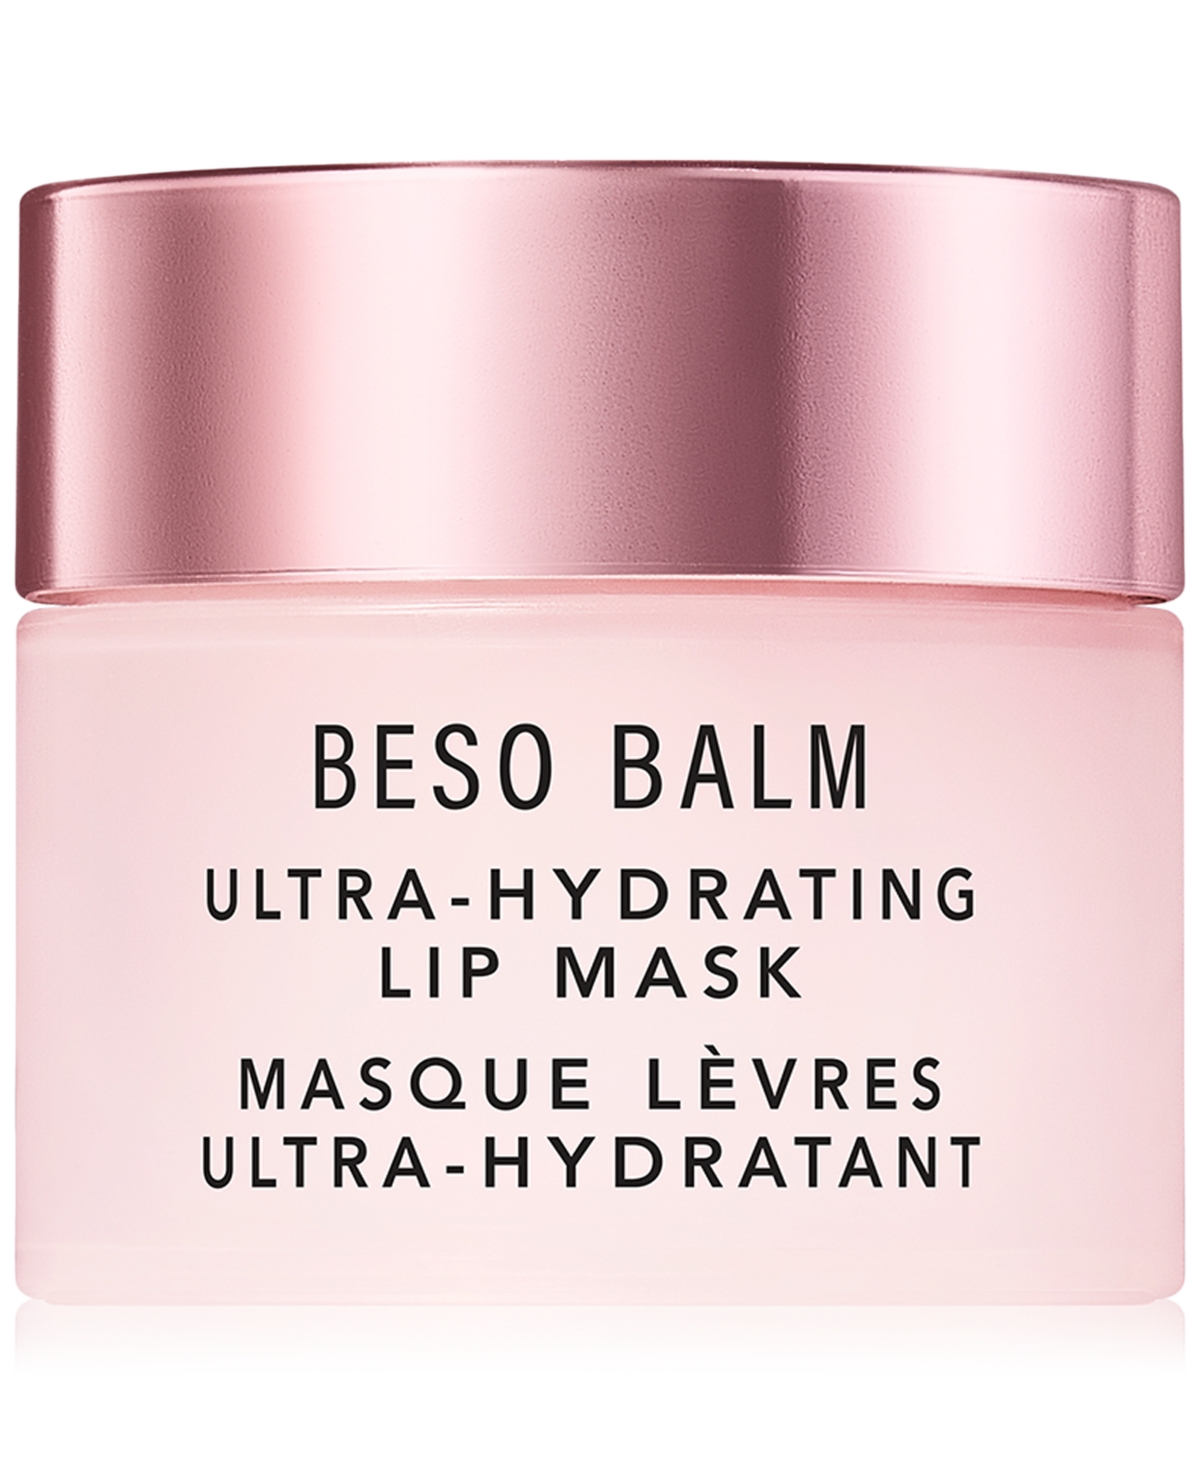 Beso Balm Ultra-Hydrating Lip Mask